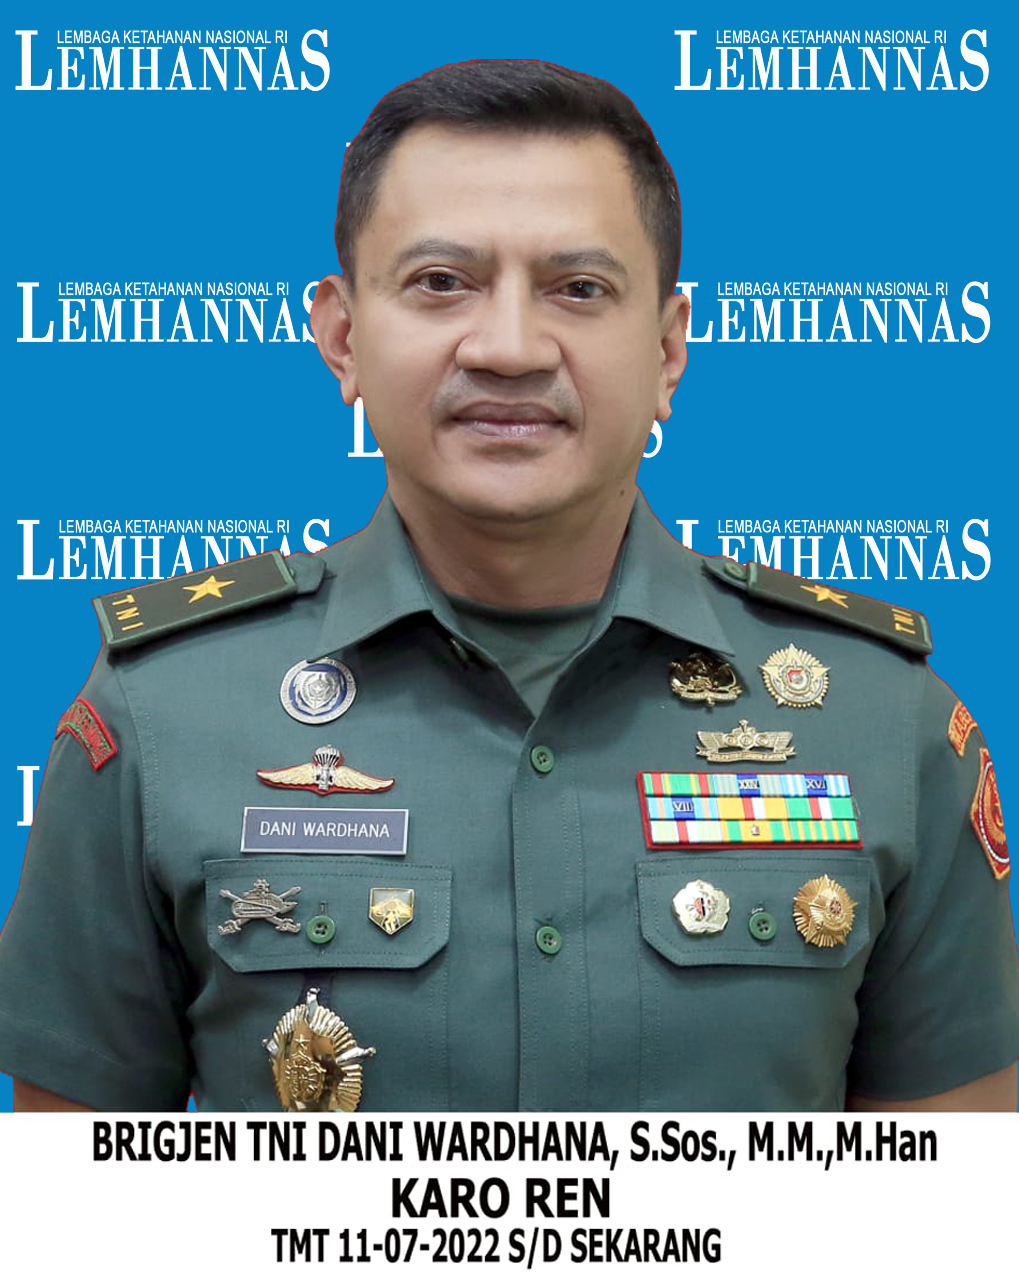 Brigjen TNI Dani Wardhana, S.Sos., M.M., M.Han.